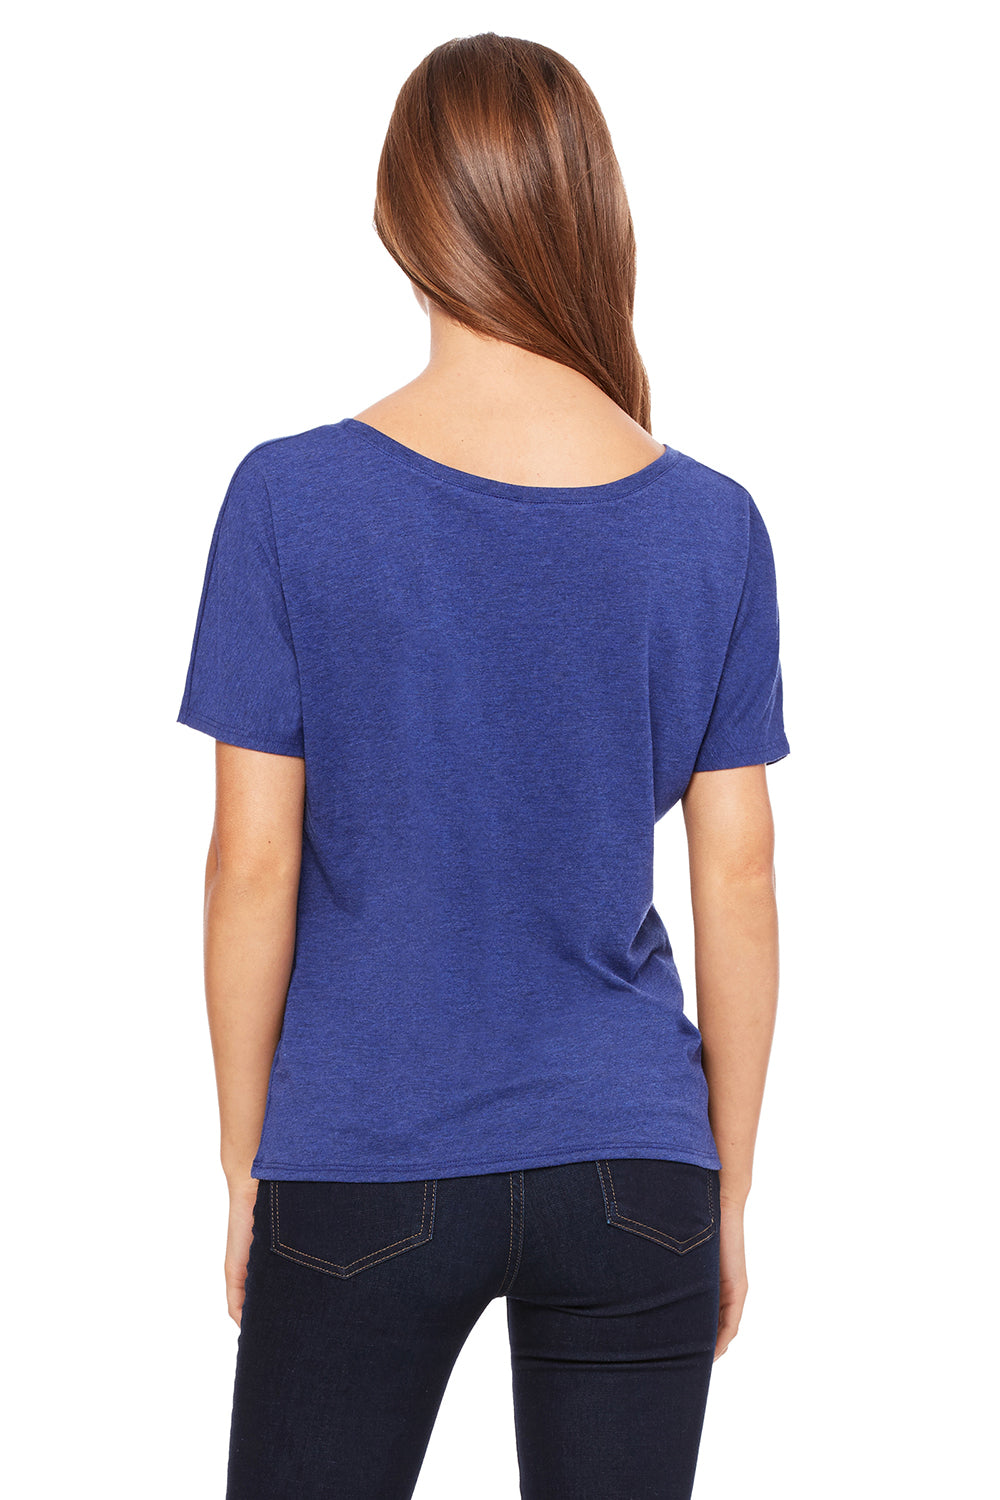 Bella + Canvas 8816 Womens Slouchy Short Sleeve Wide Neck T-Shirt Navy Blue Triblend Back